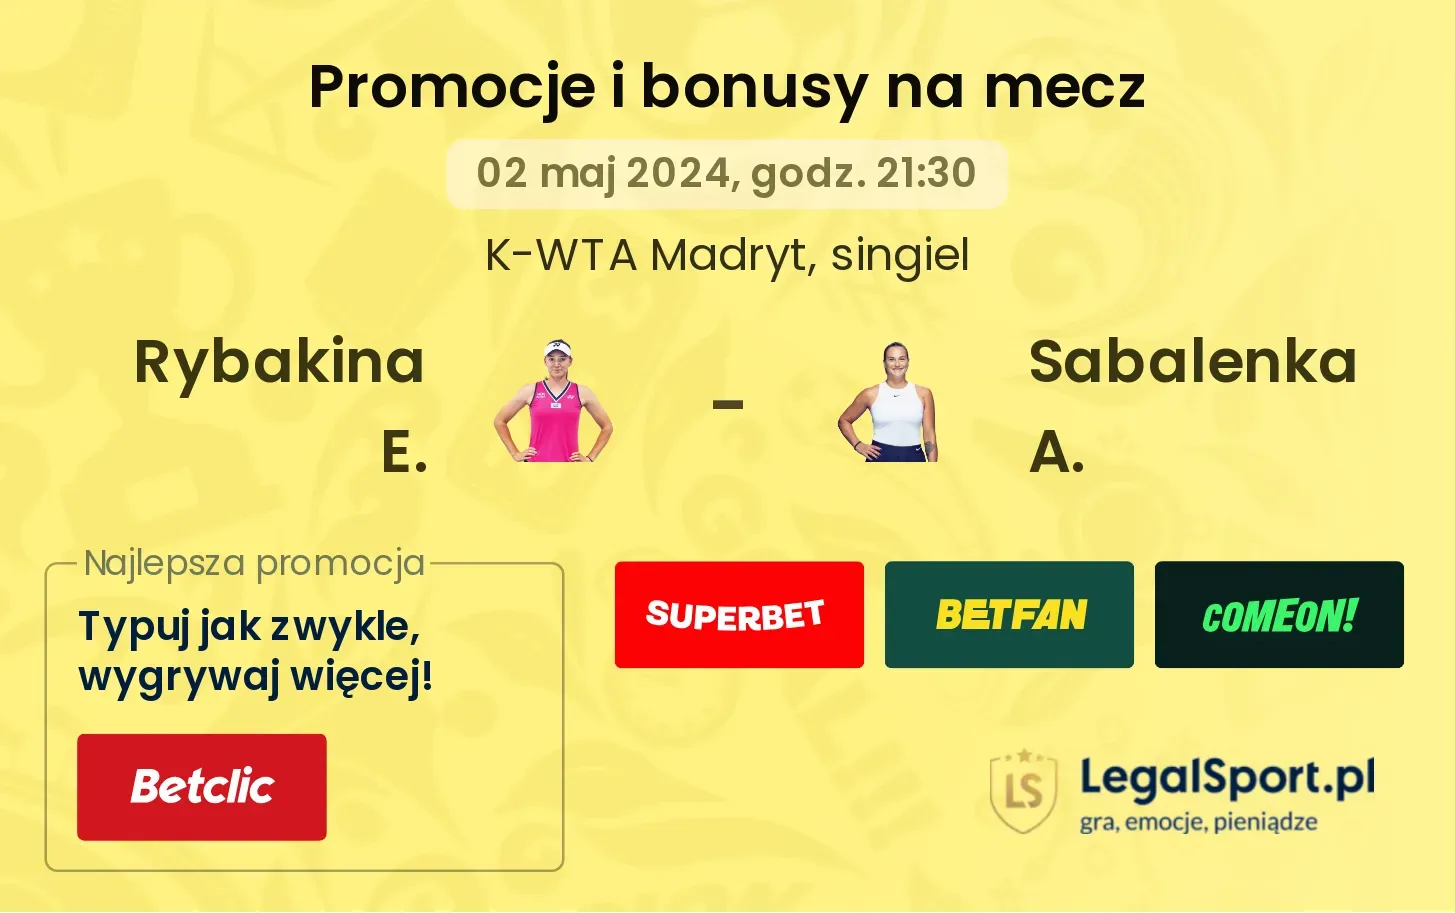 Rybakina E. - Sabalenka A. promocje bonusy na mecz